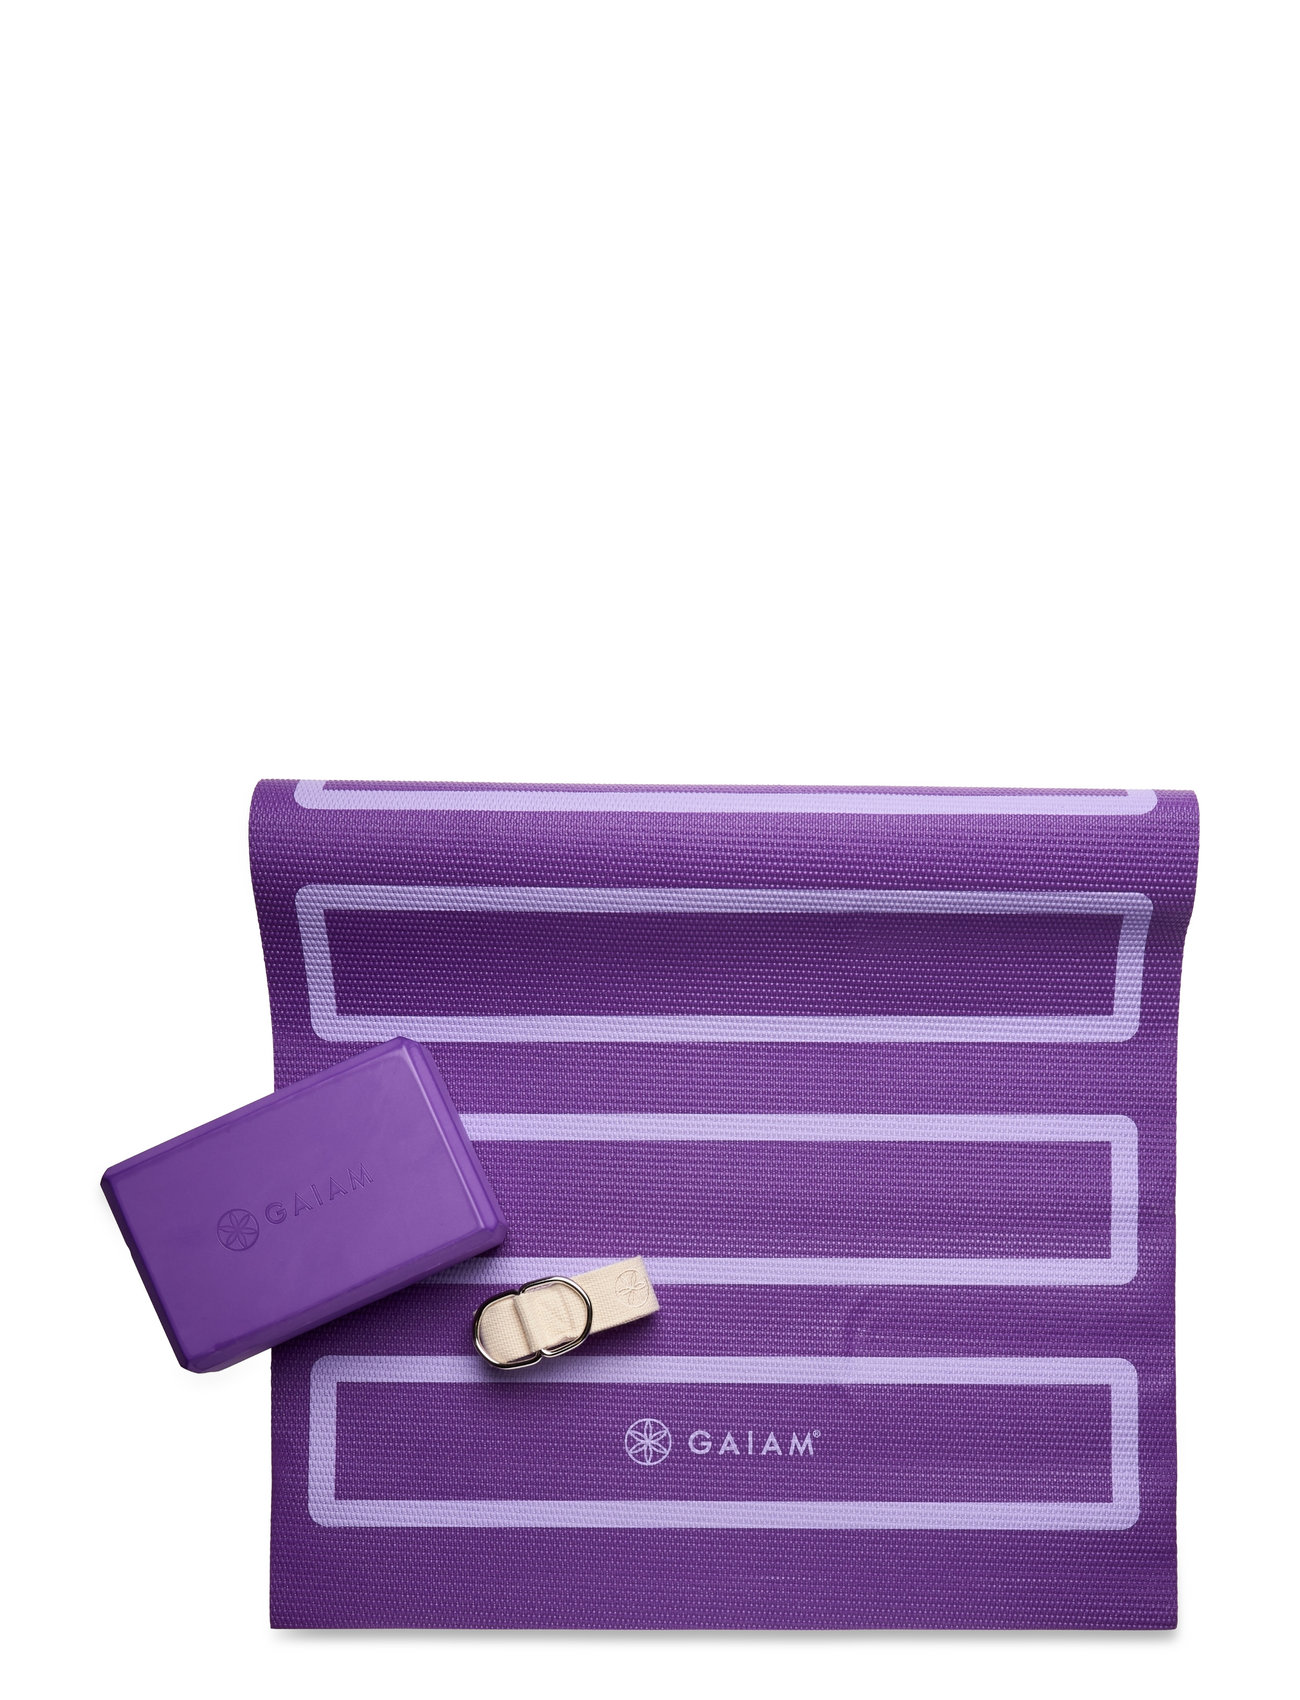 Gaiam Unisex Beginners Kit, Purple, One Size 